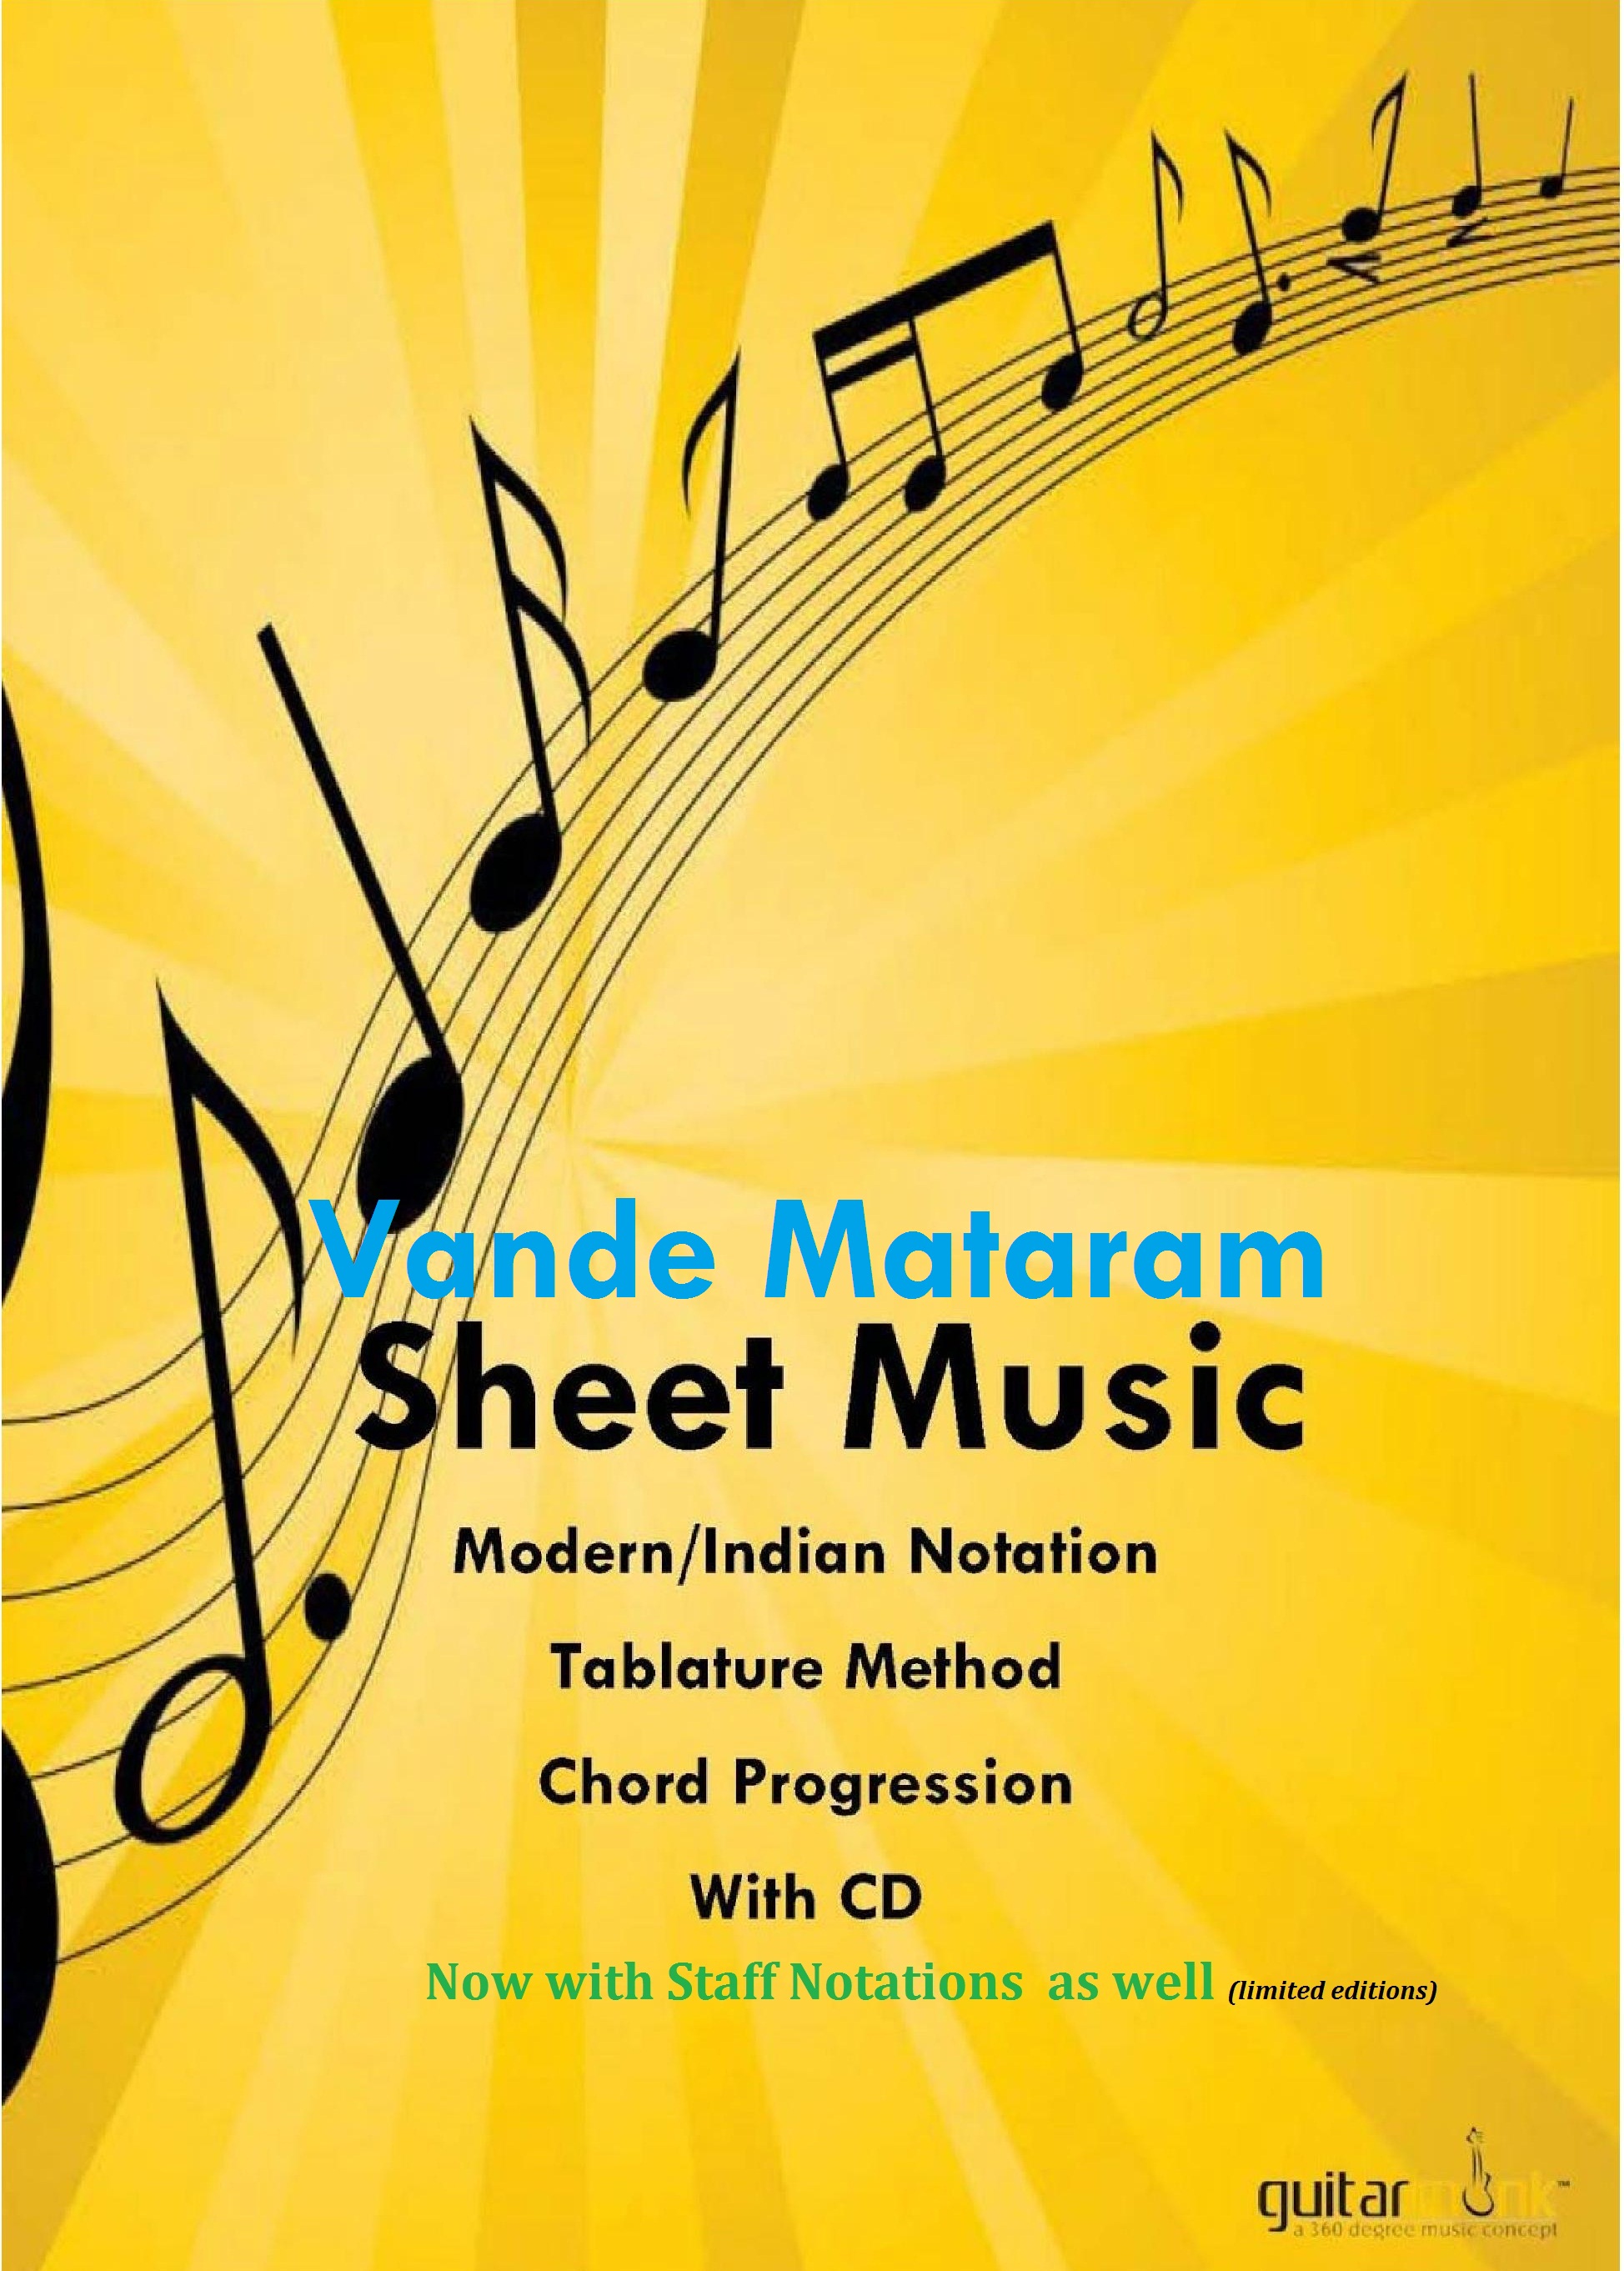 Vande Mataram Sheet Music Notations